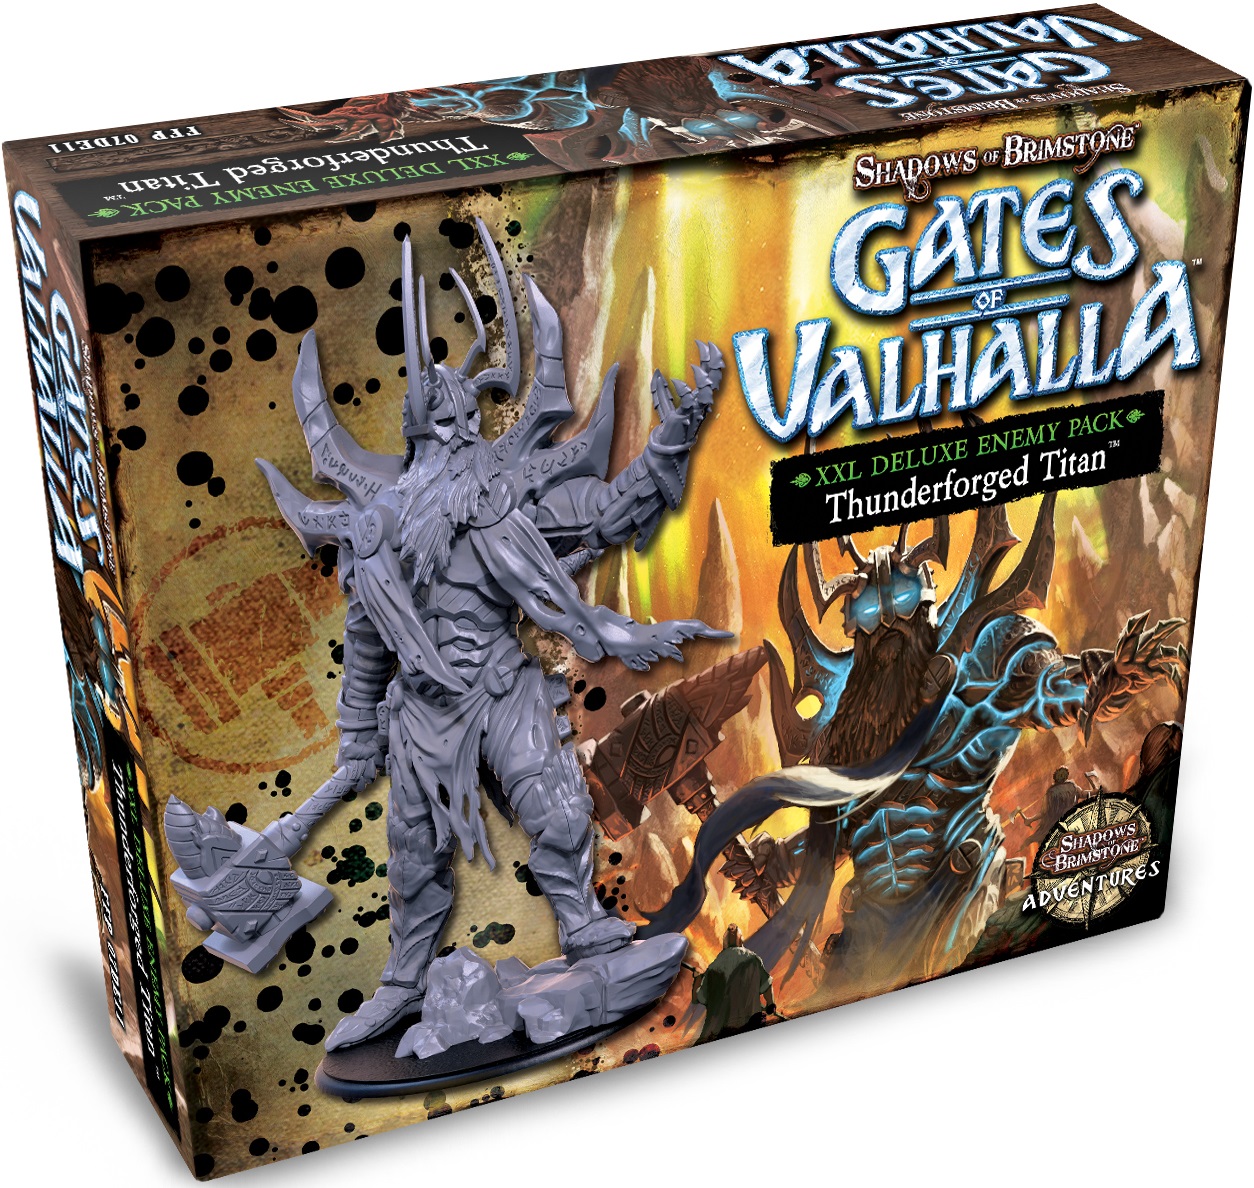 Shadows of Brimstone: Gates of Valhalla: XXL Deluxe Enemy Pack: Thunderforged Titan  